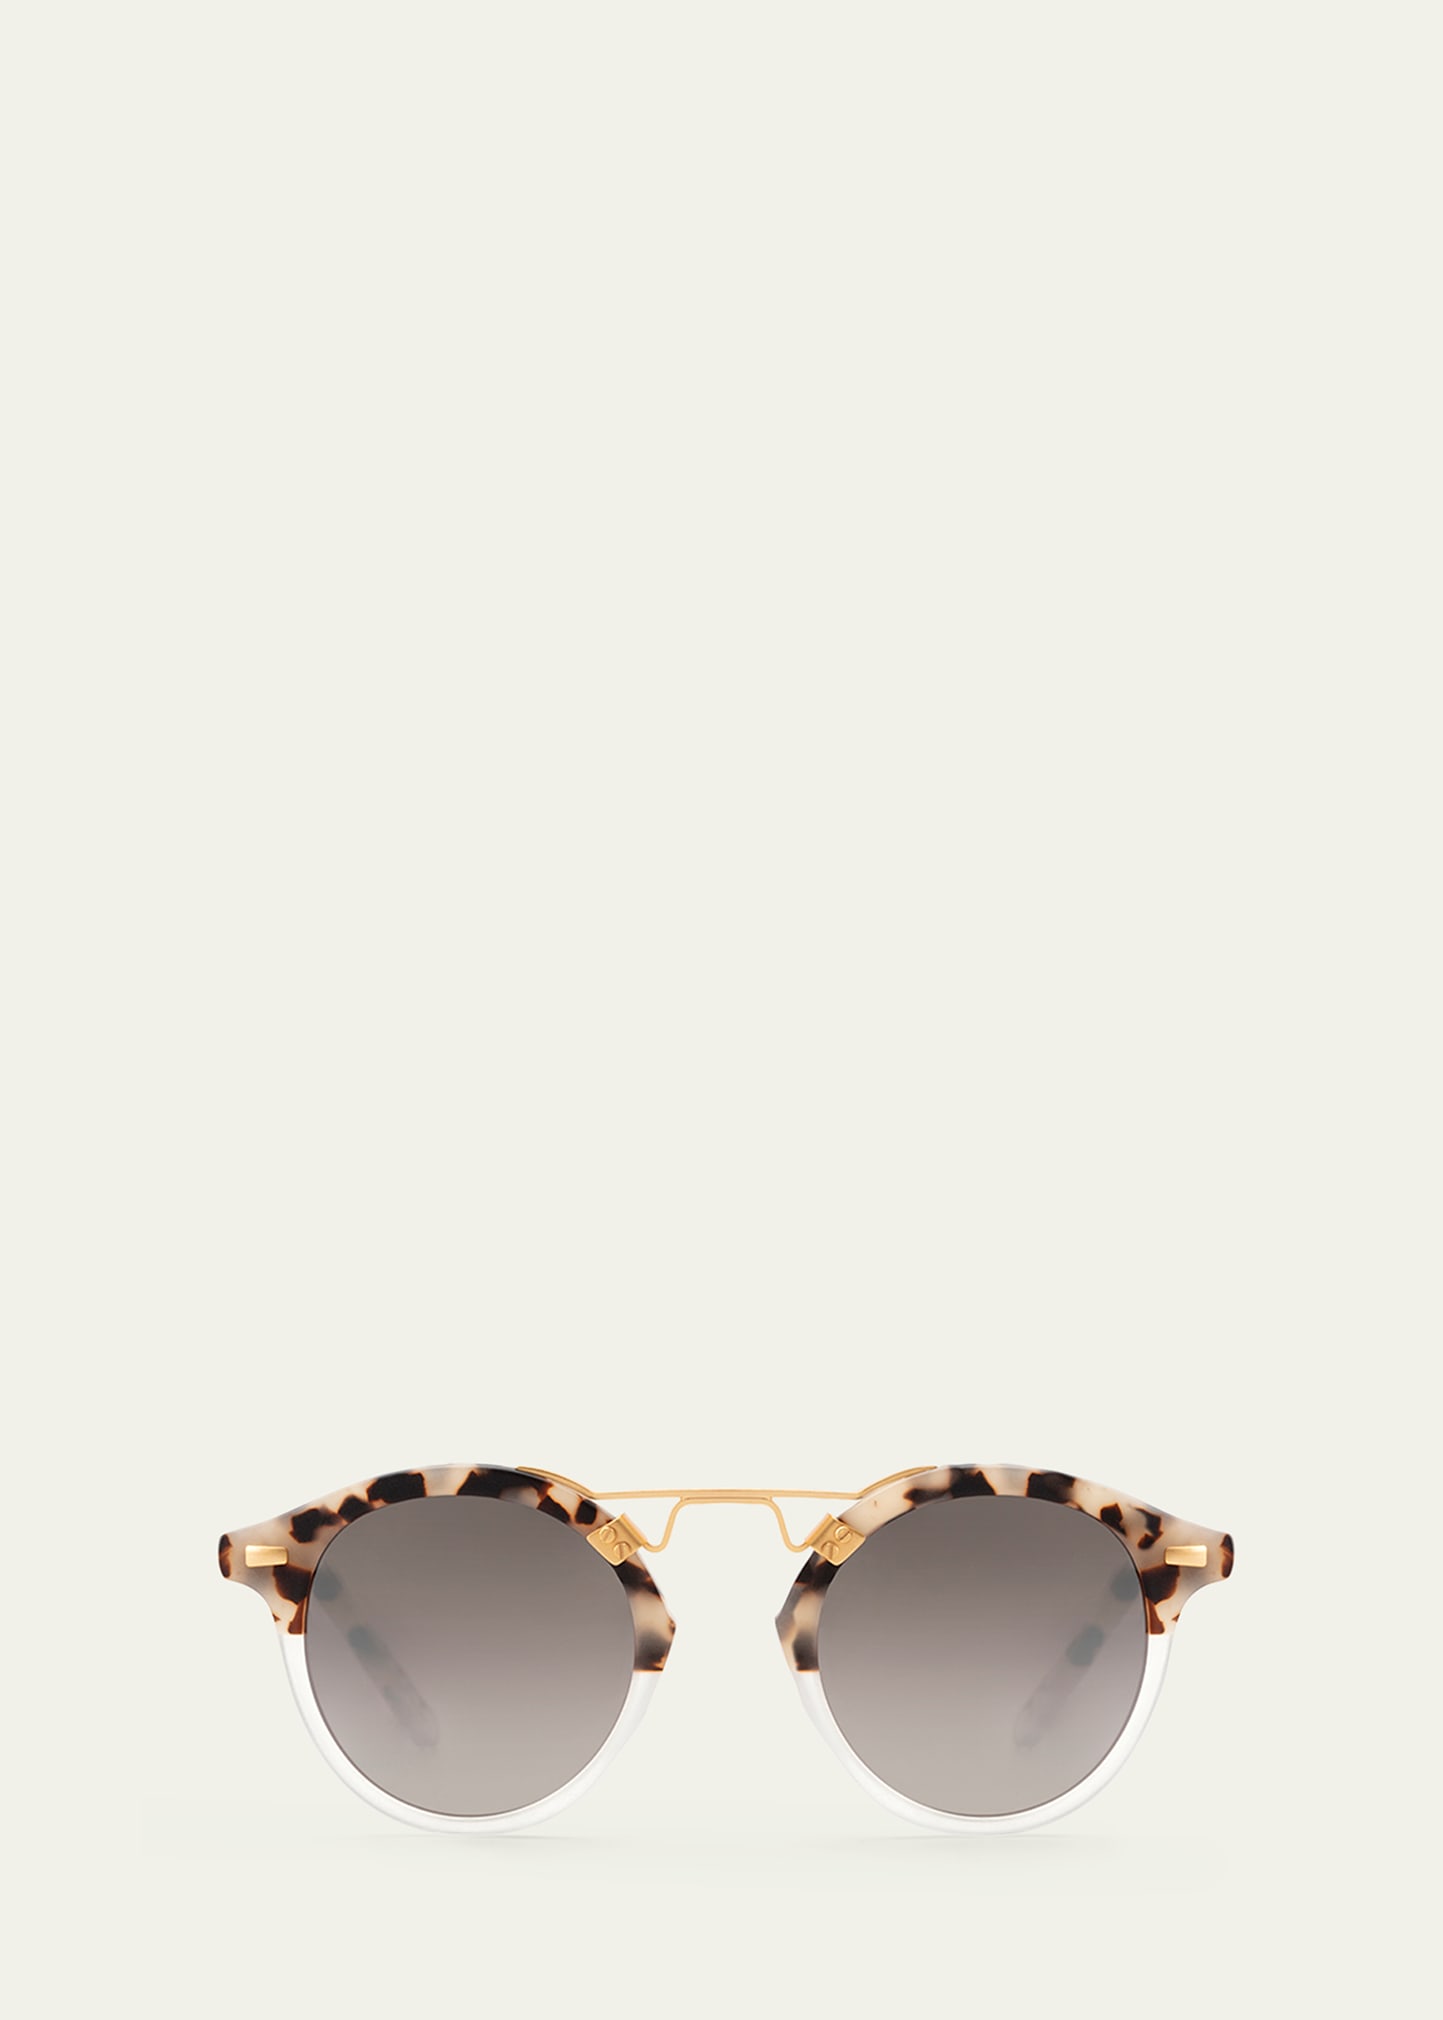 St. Louis Round Sunglasses